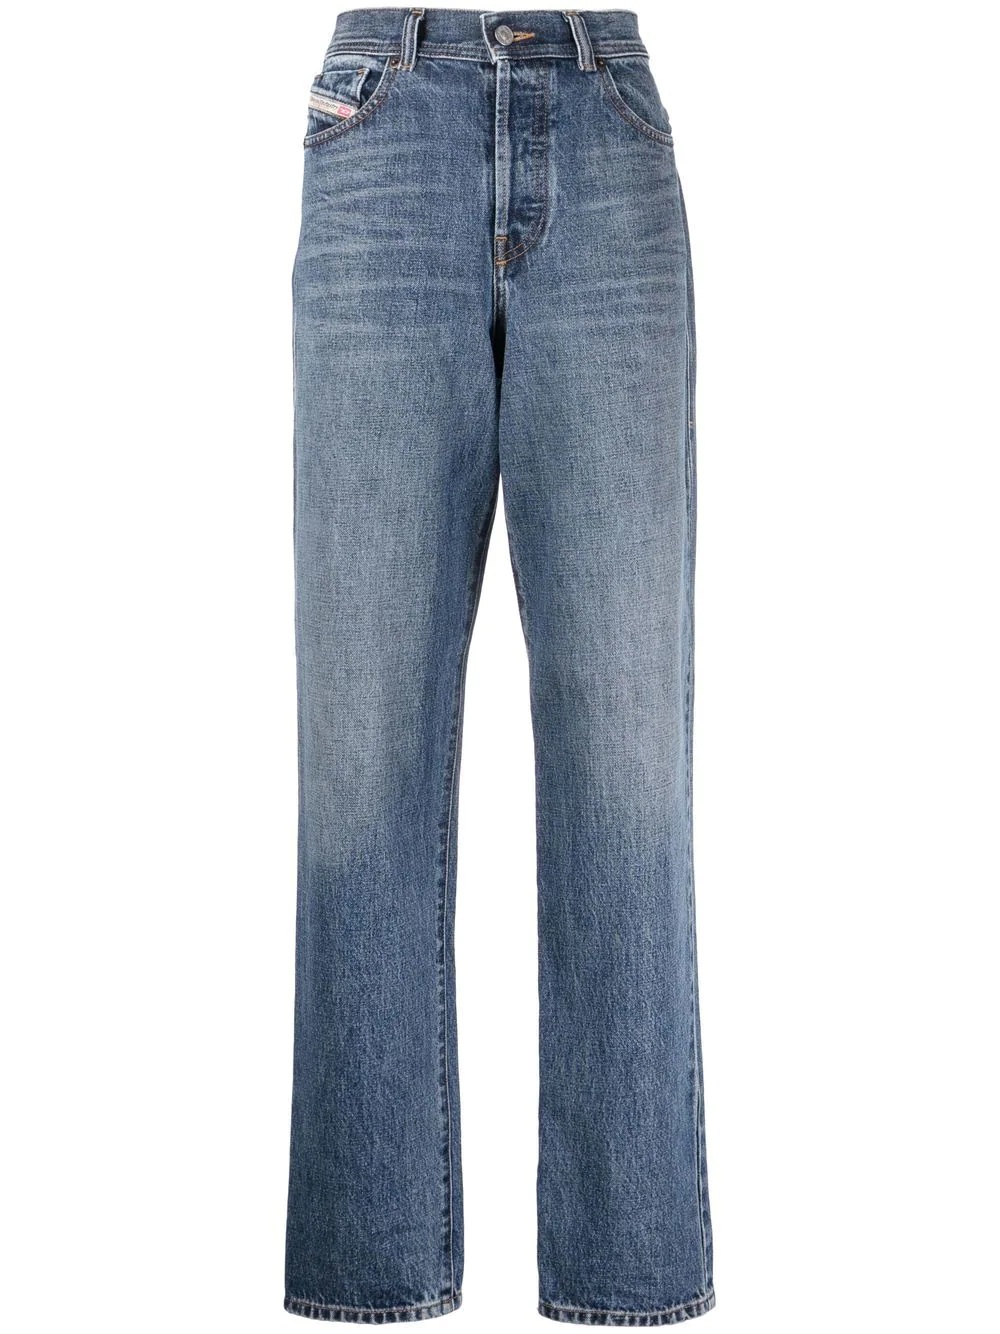 1956 straight leg jeans - 1